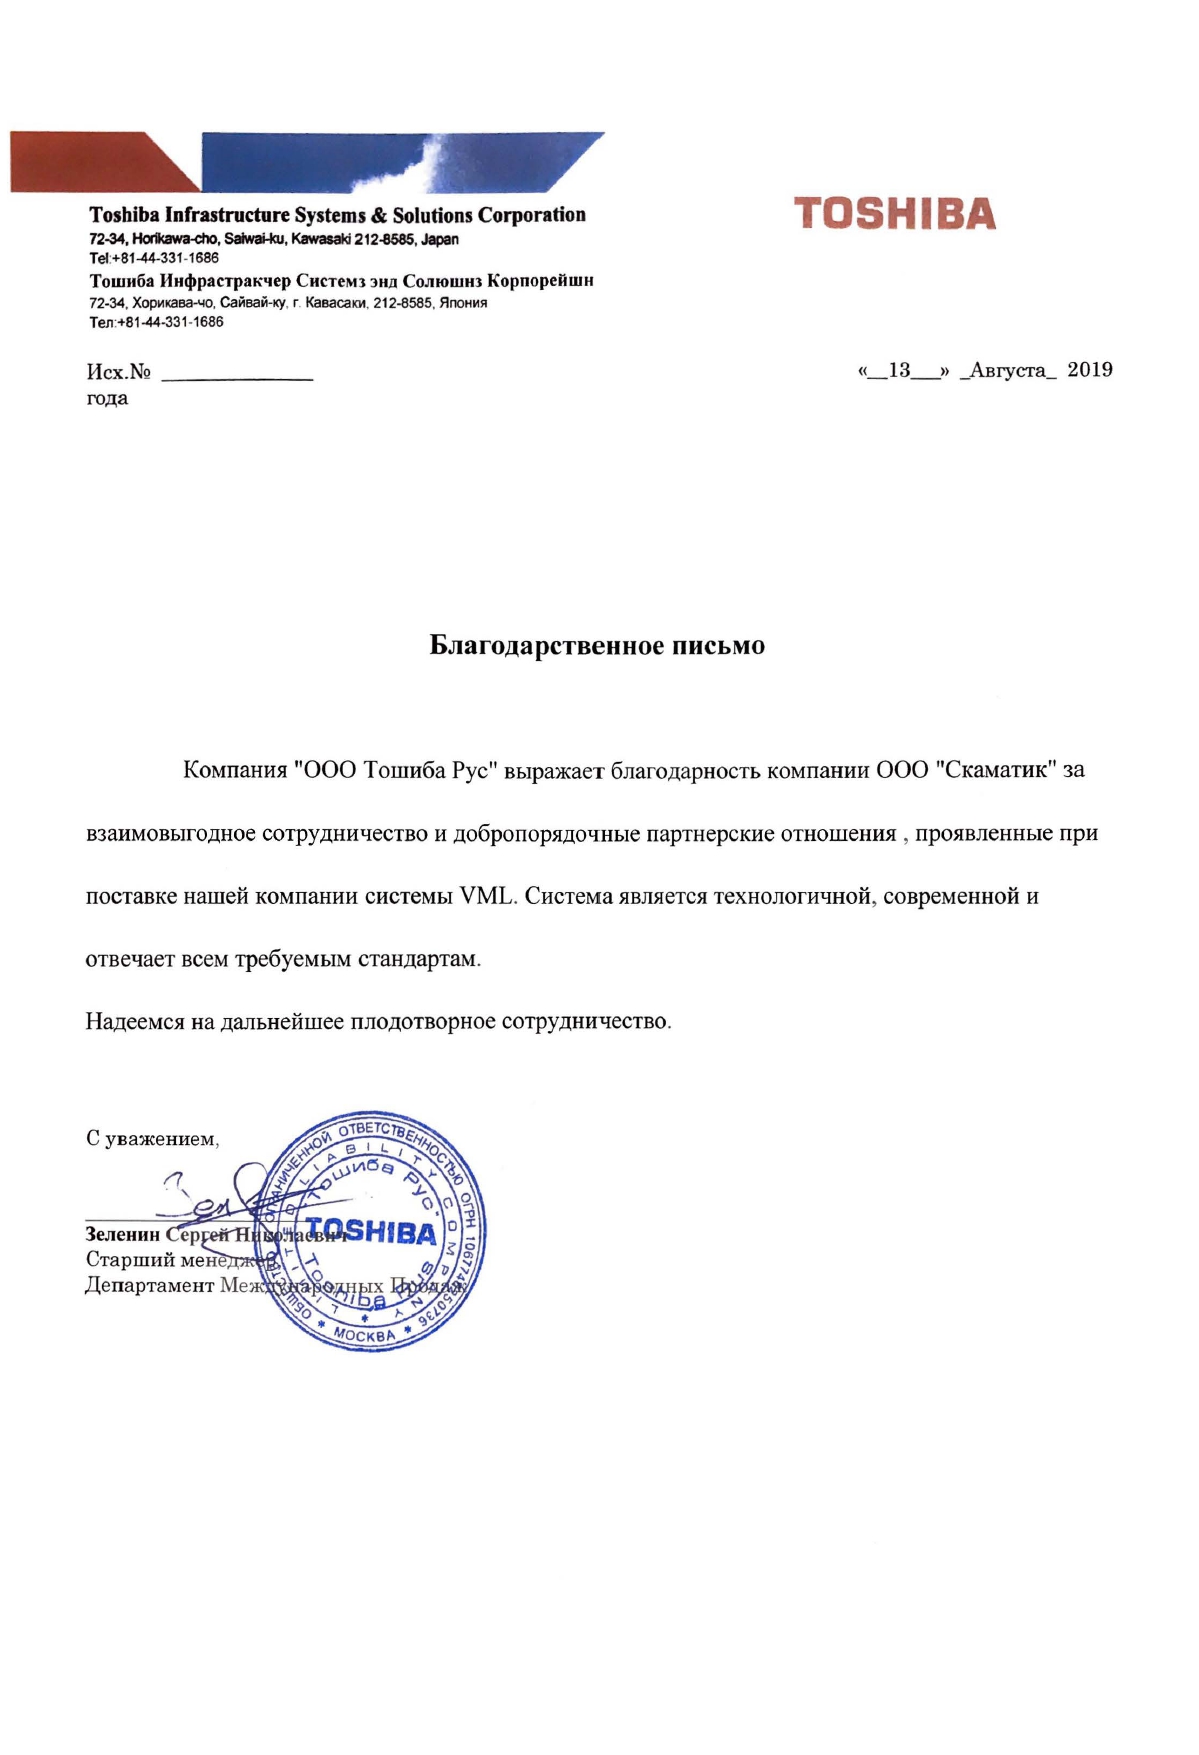 Сертификат компании СКАМАТИК